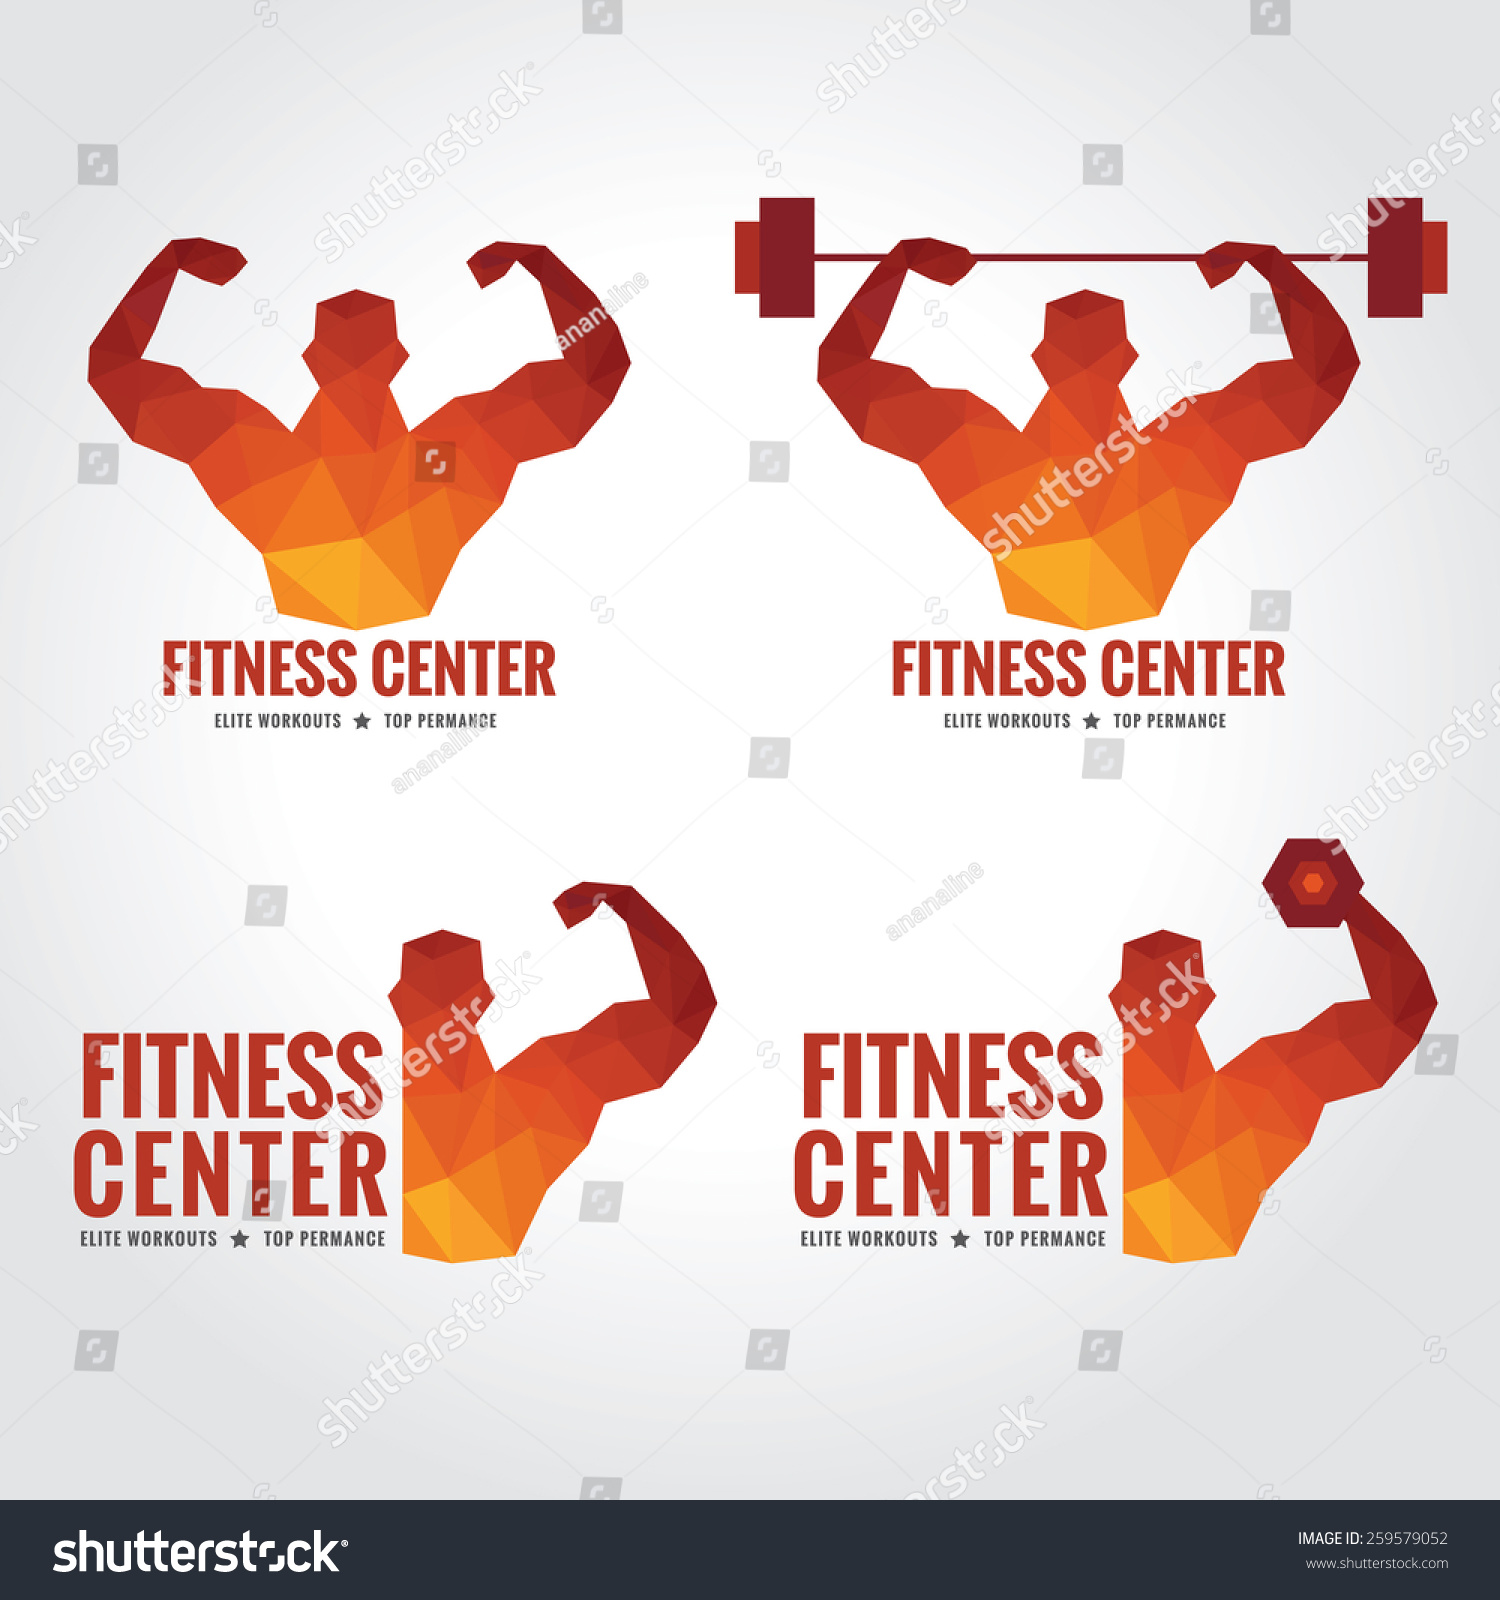 fitness center clip art - photo #46